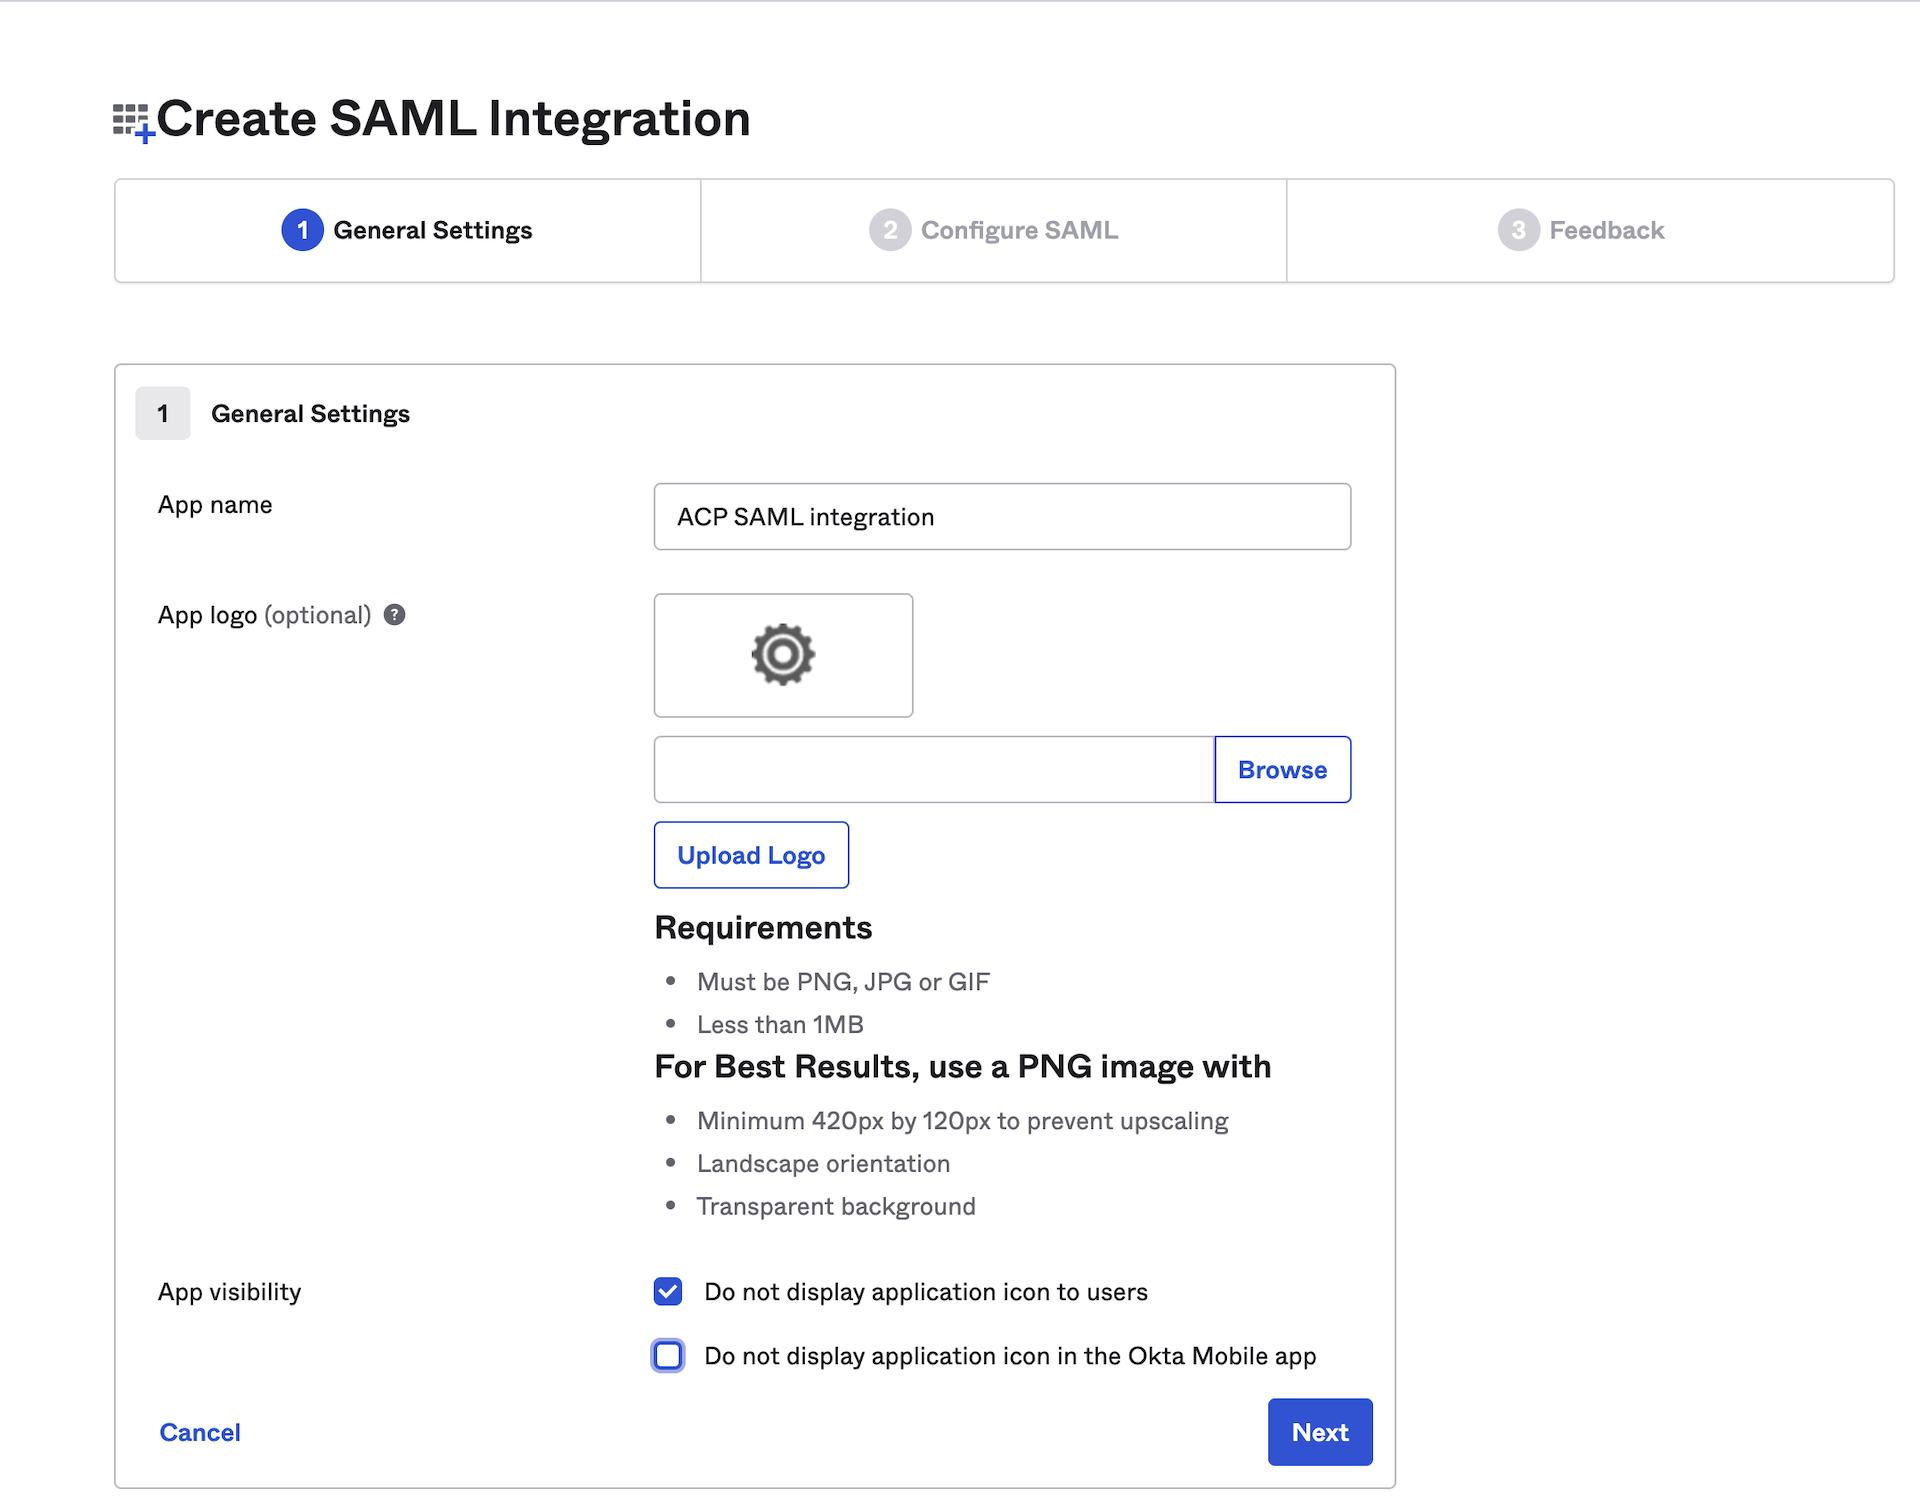 Creating new app integration with SAML